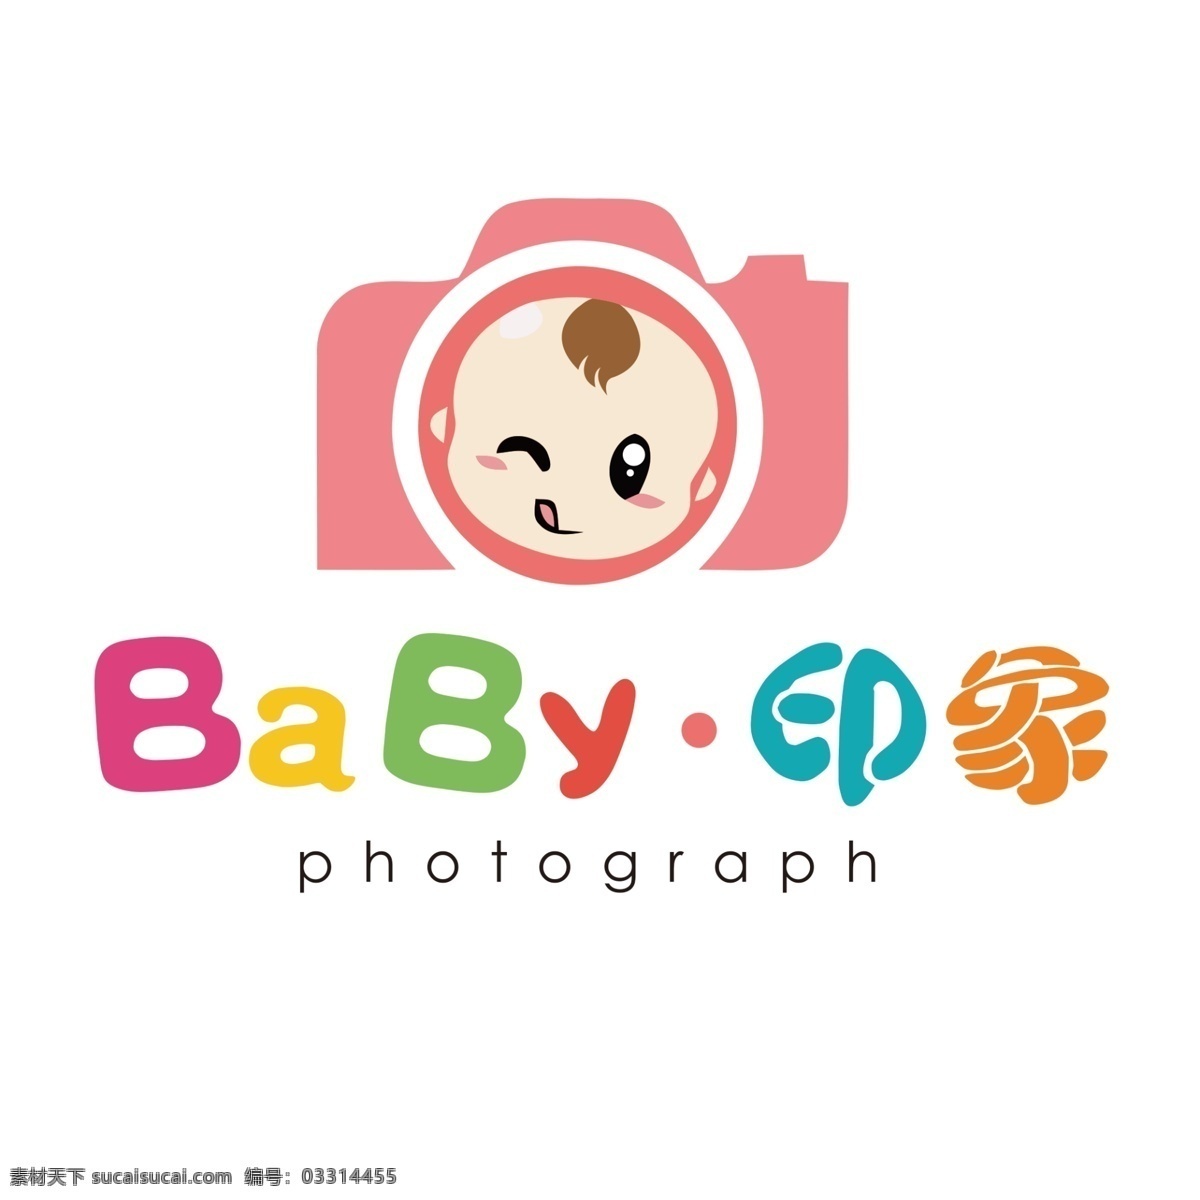 儿童摄影 logo 儿童logo 摄影logo logo设计 婴儿logo 彩色logo 可爱logo